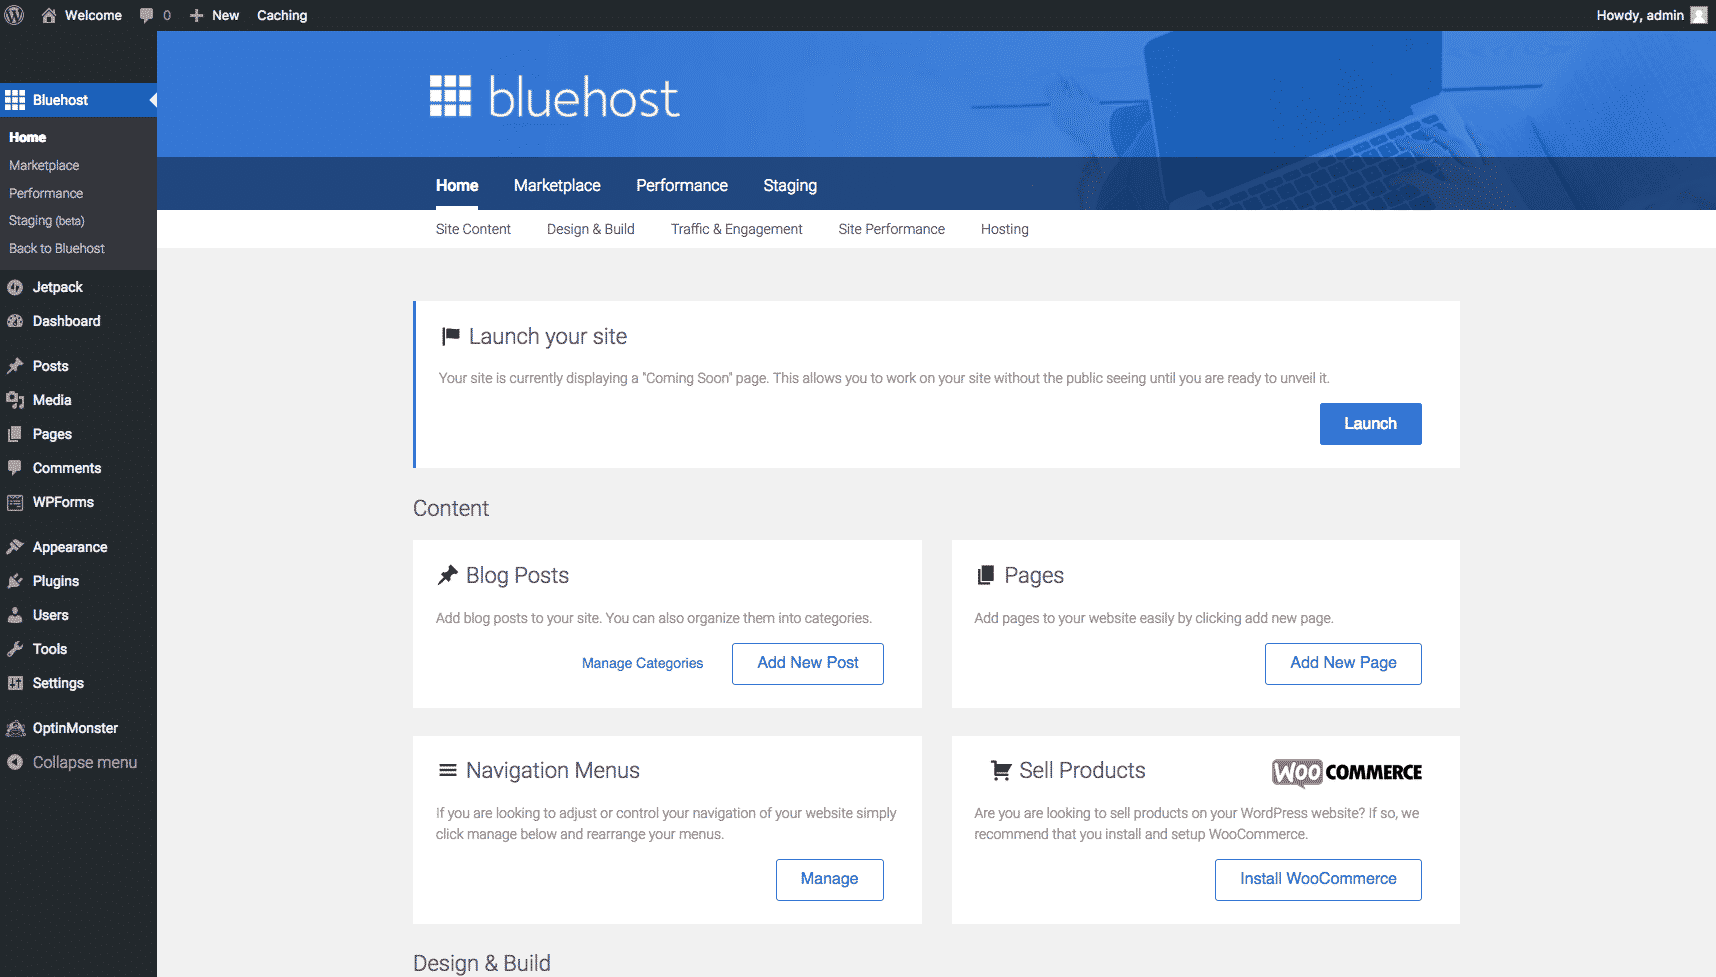 bluehost wordpress dashboard